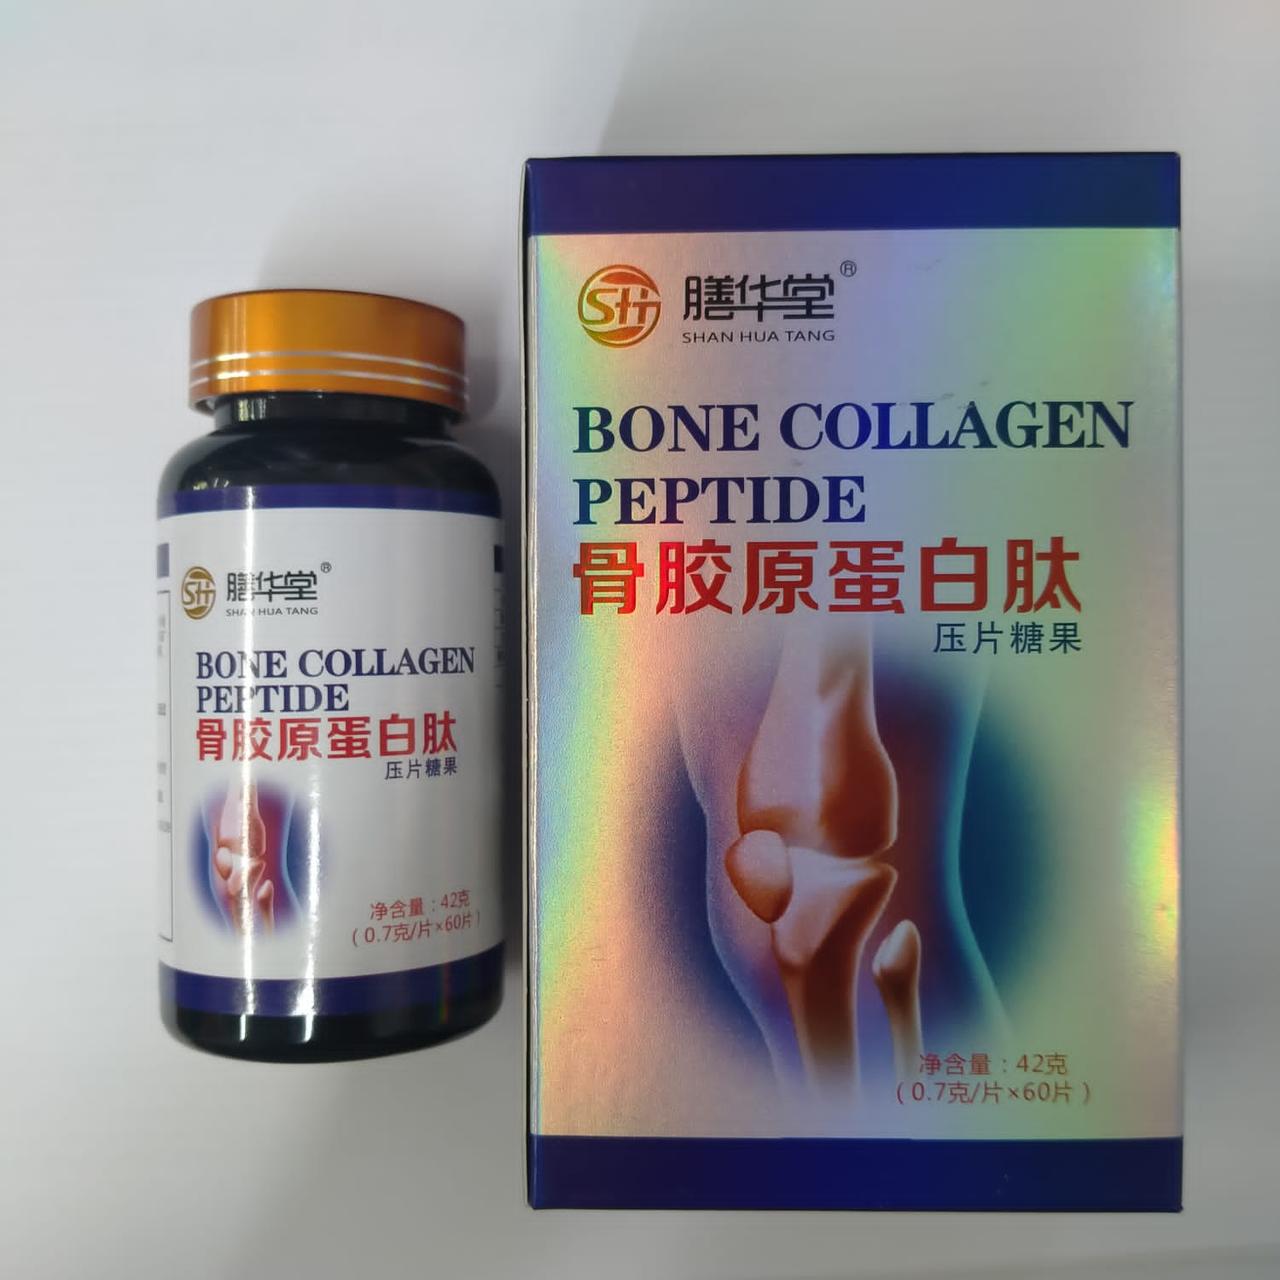 Таблетки Bone Collagen Peptide из коллагенового пептида, банка 60 таблеток